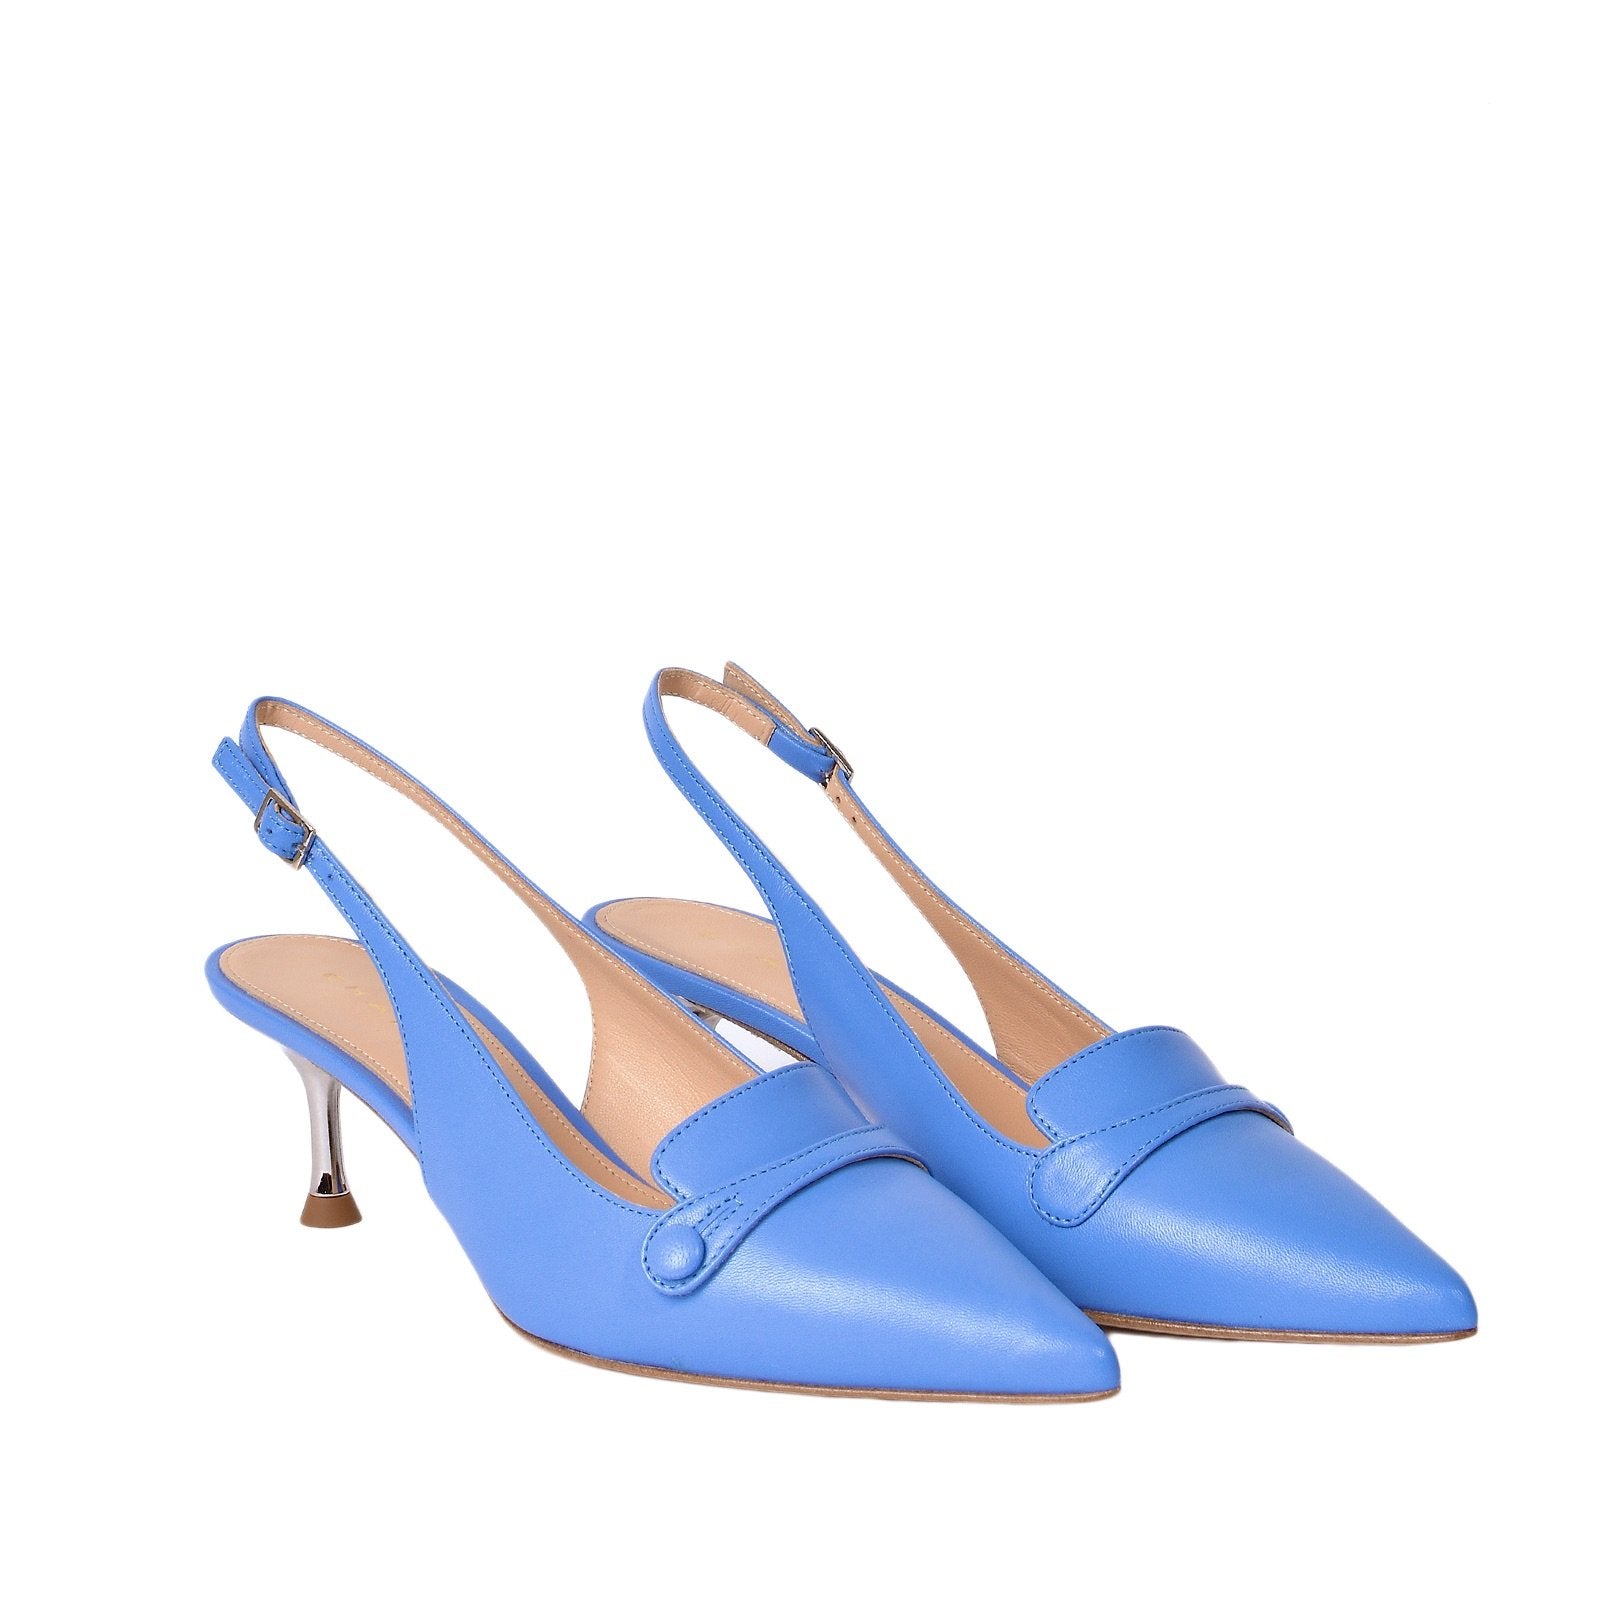 Chiffon Sling Back Shoes In Light Blue Heels 1002/Blue - 3